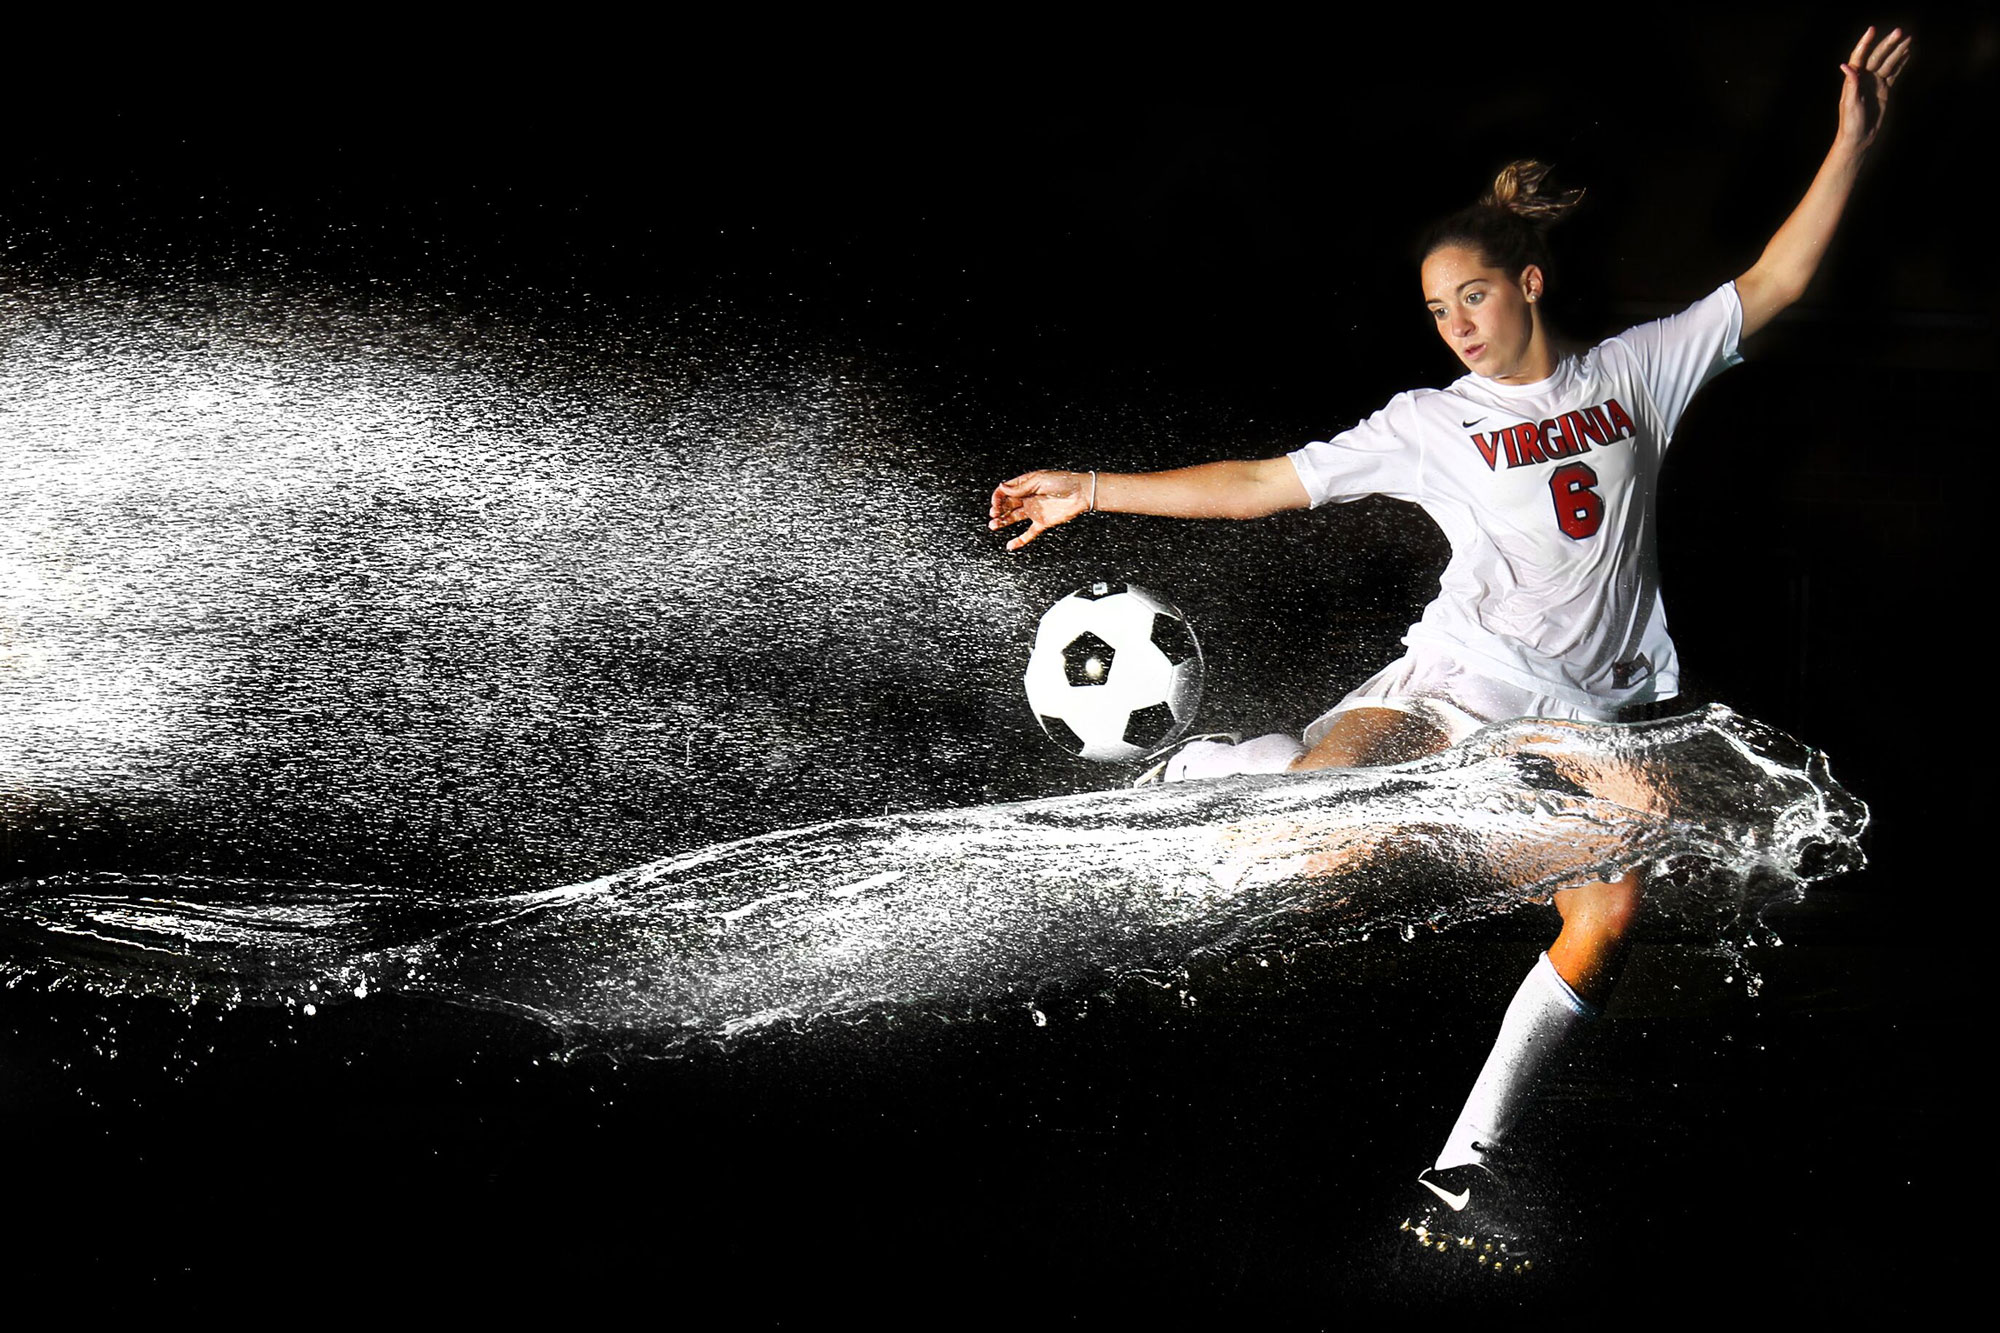 Morgan Brian kicking a soccer ball while water splashes